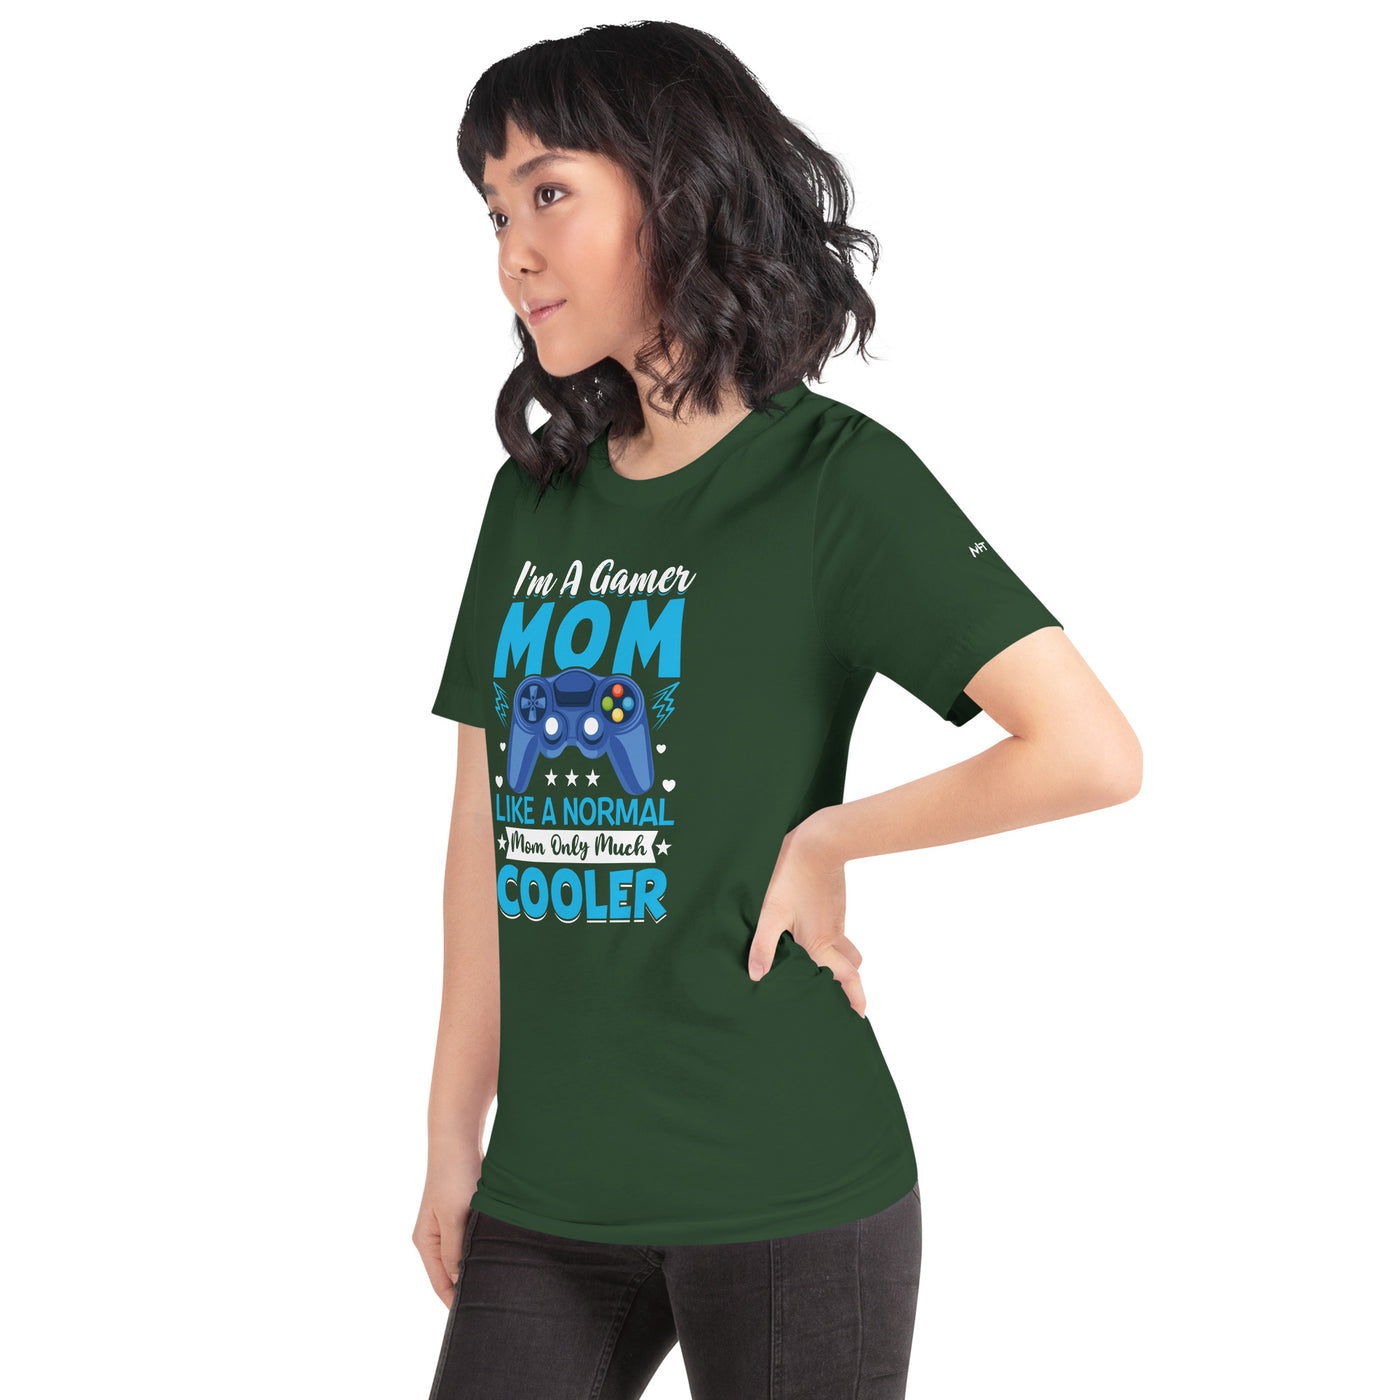 I am a Gamer Mom - Unisex t-shirt